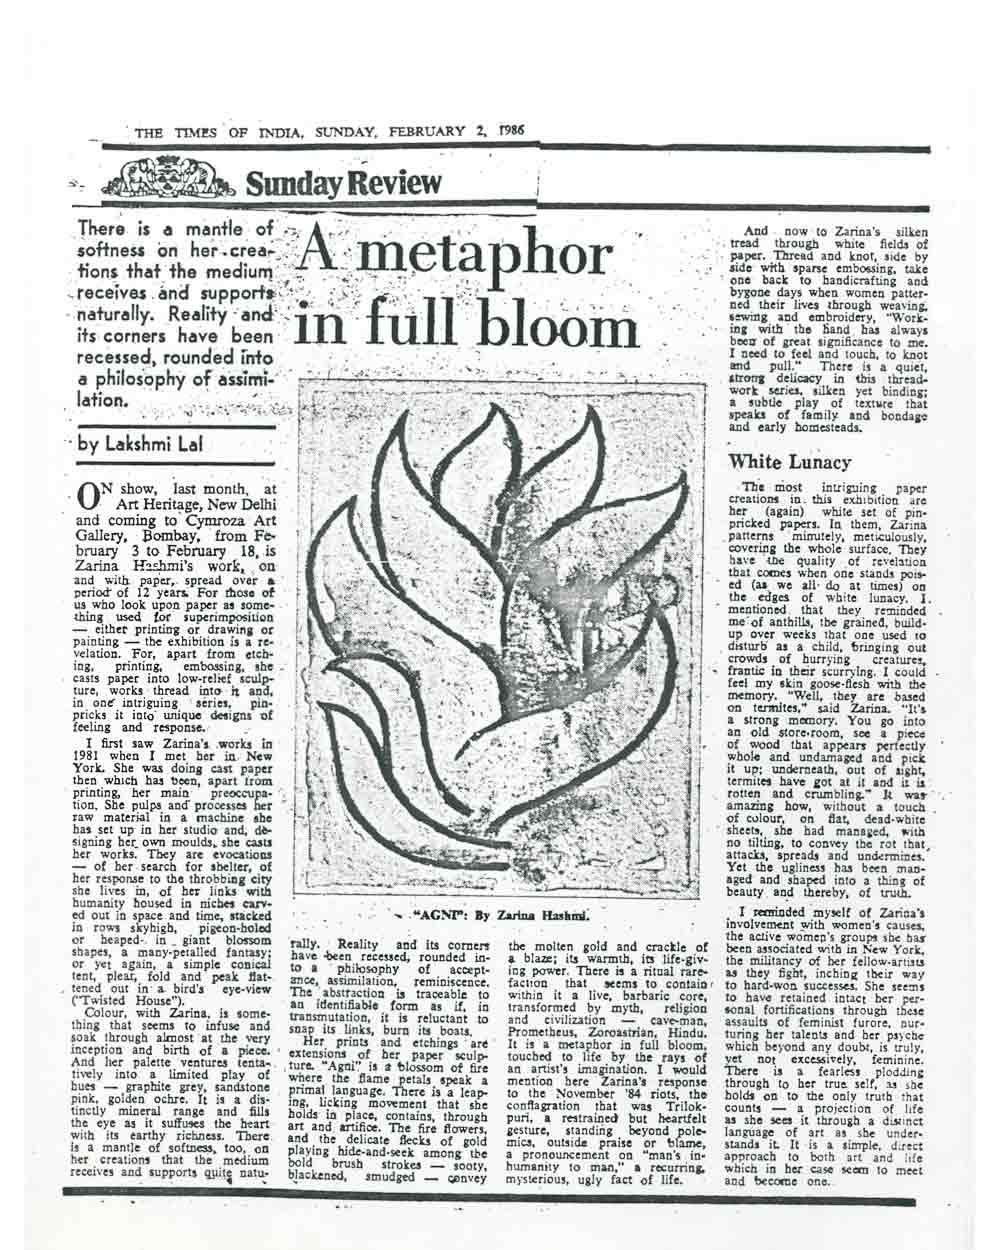 Article, A metaphor in Full Bloom